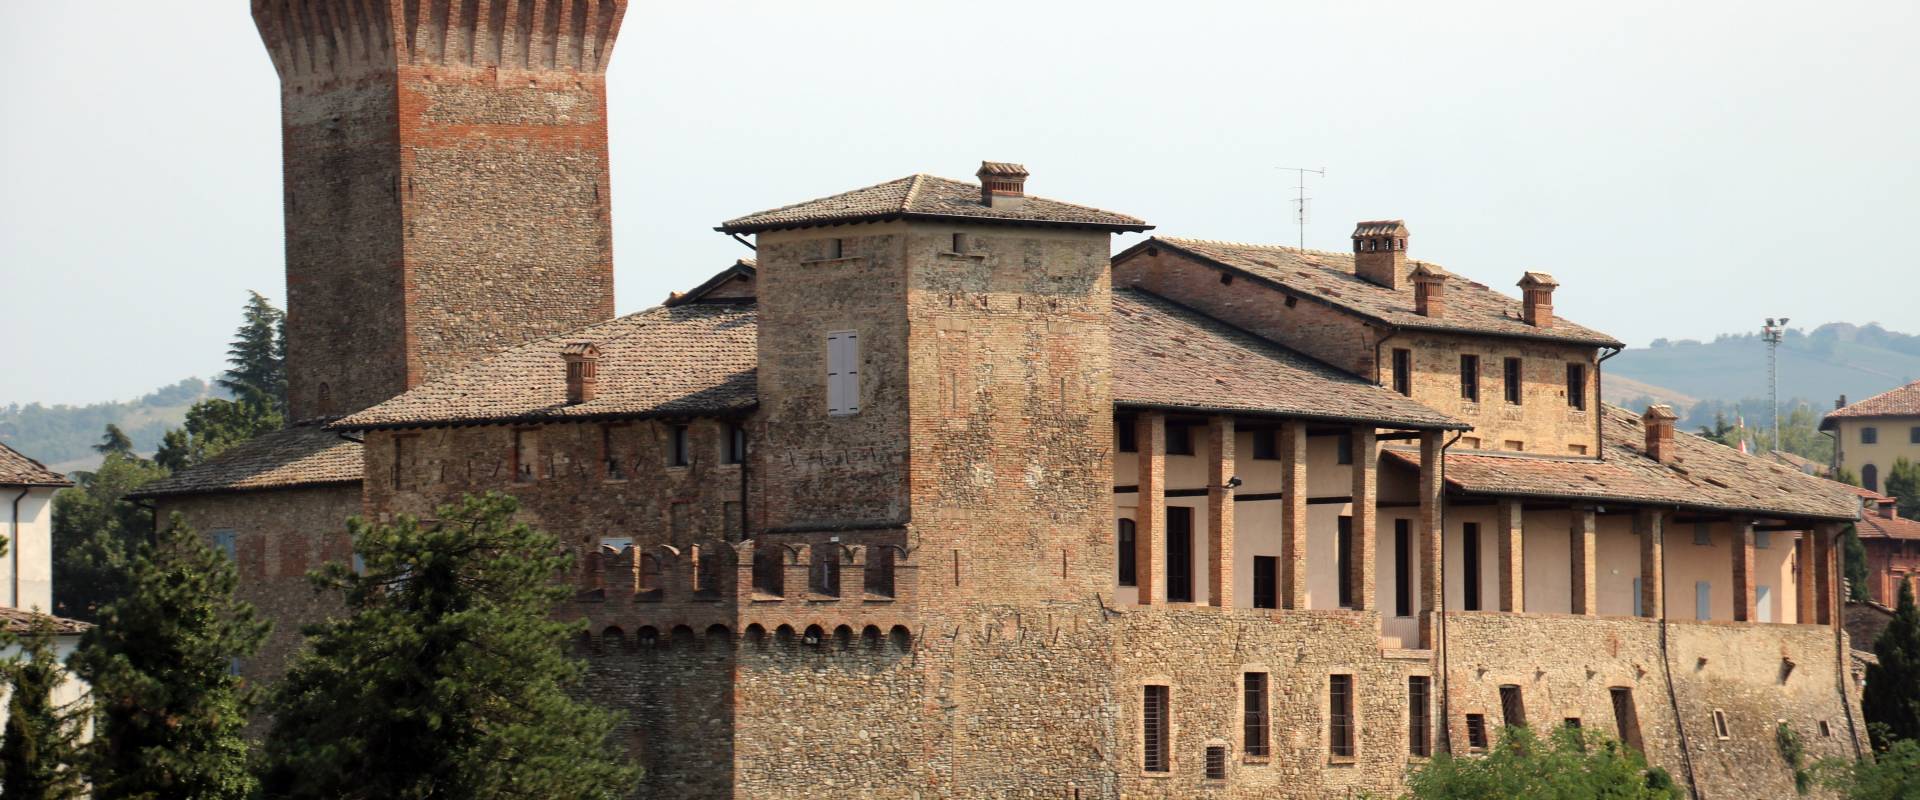 Castello di Levizzano Rangone 34 photo by Mongolo1984